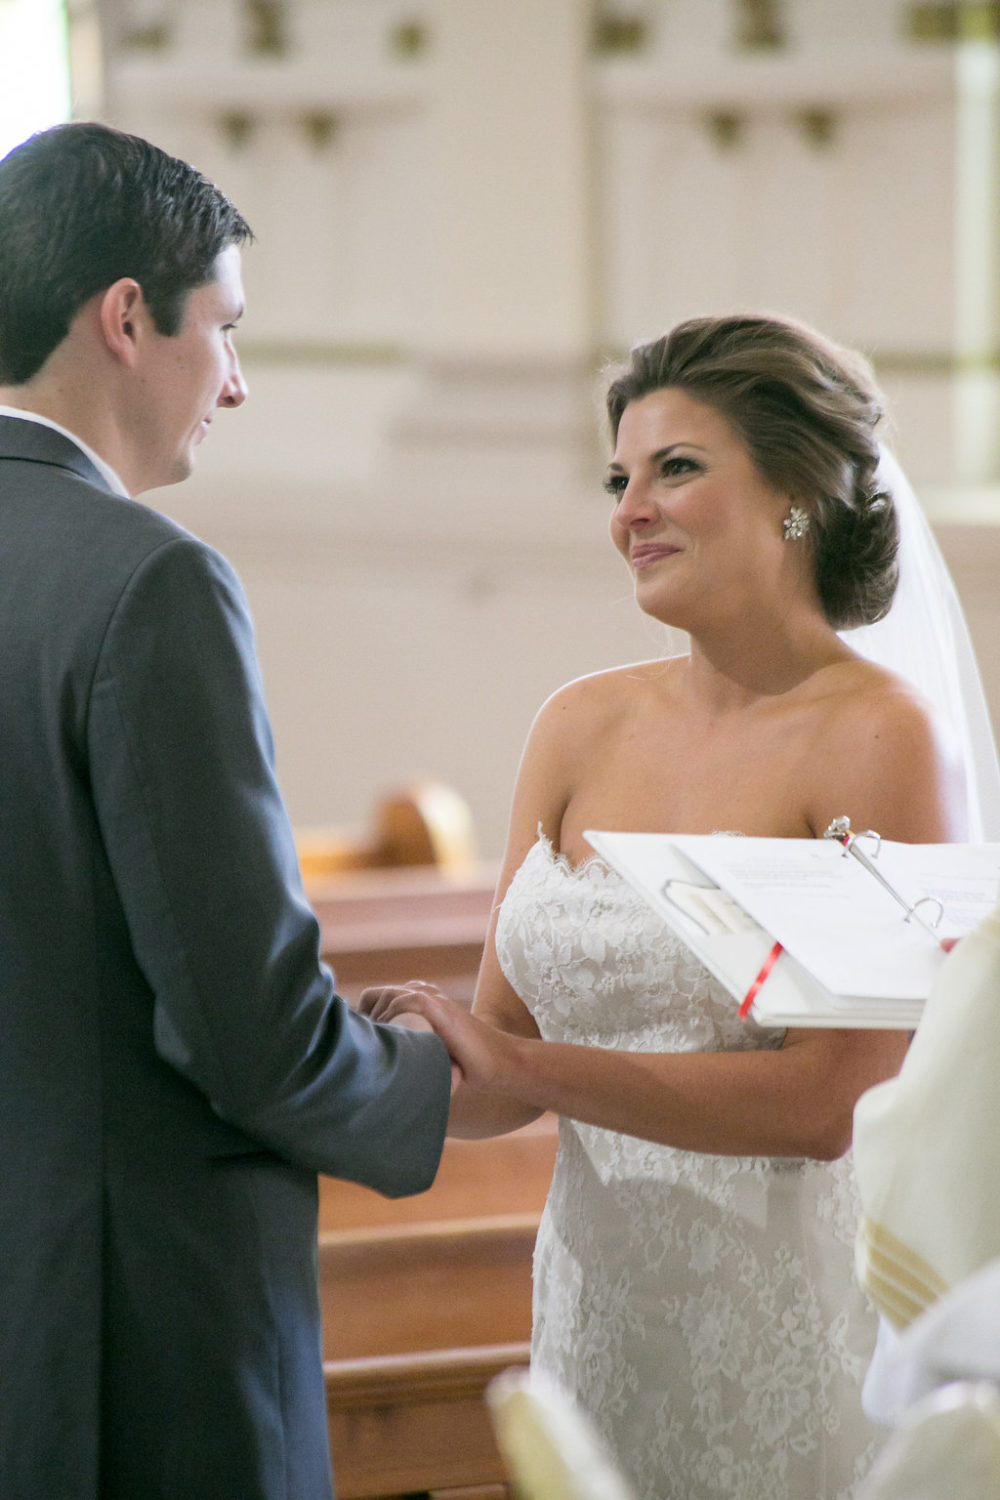 Catholic wedding vows